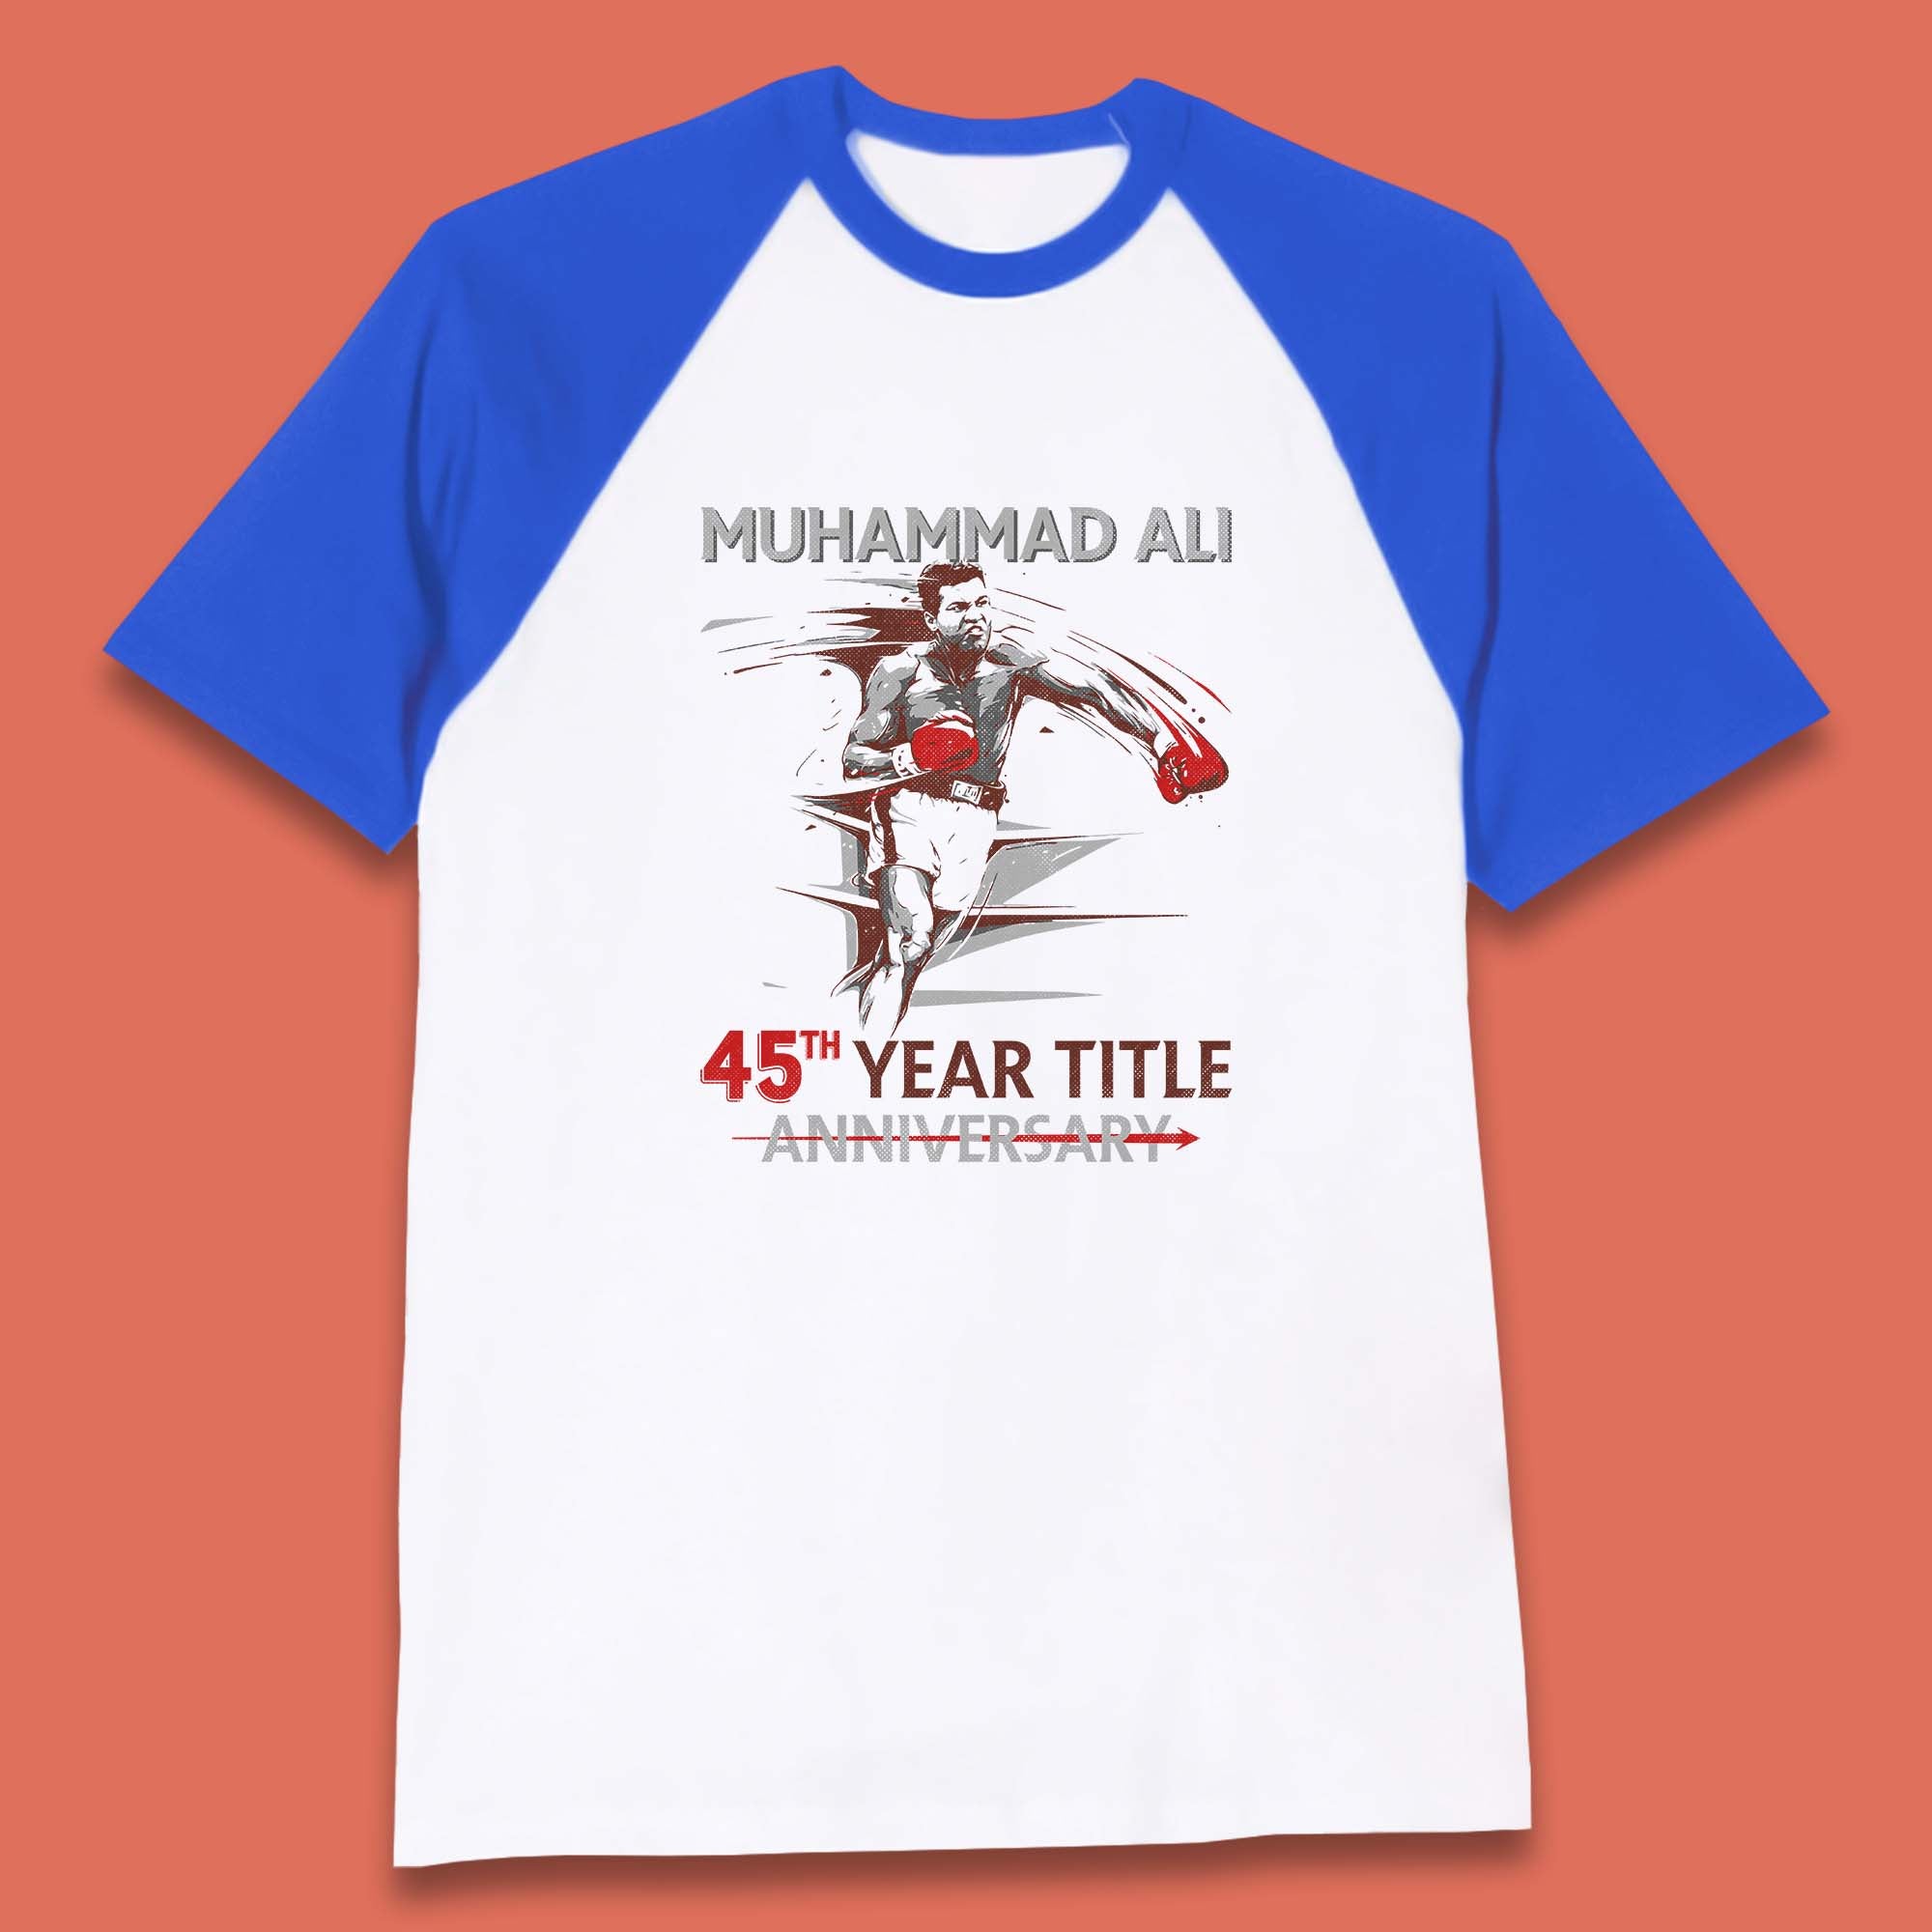 Muhammad Ali 45th Year Title Anniversary World Boxing Champion American Heavyweight Boxer Baseball T Shirt